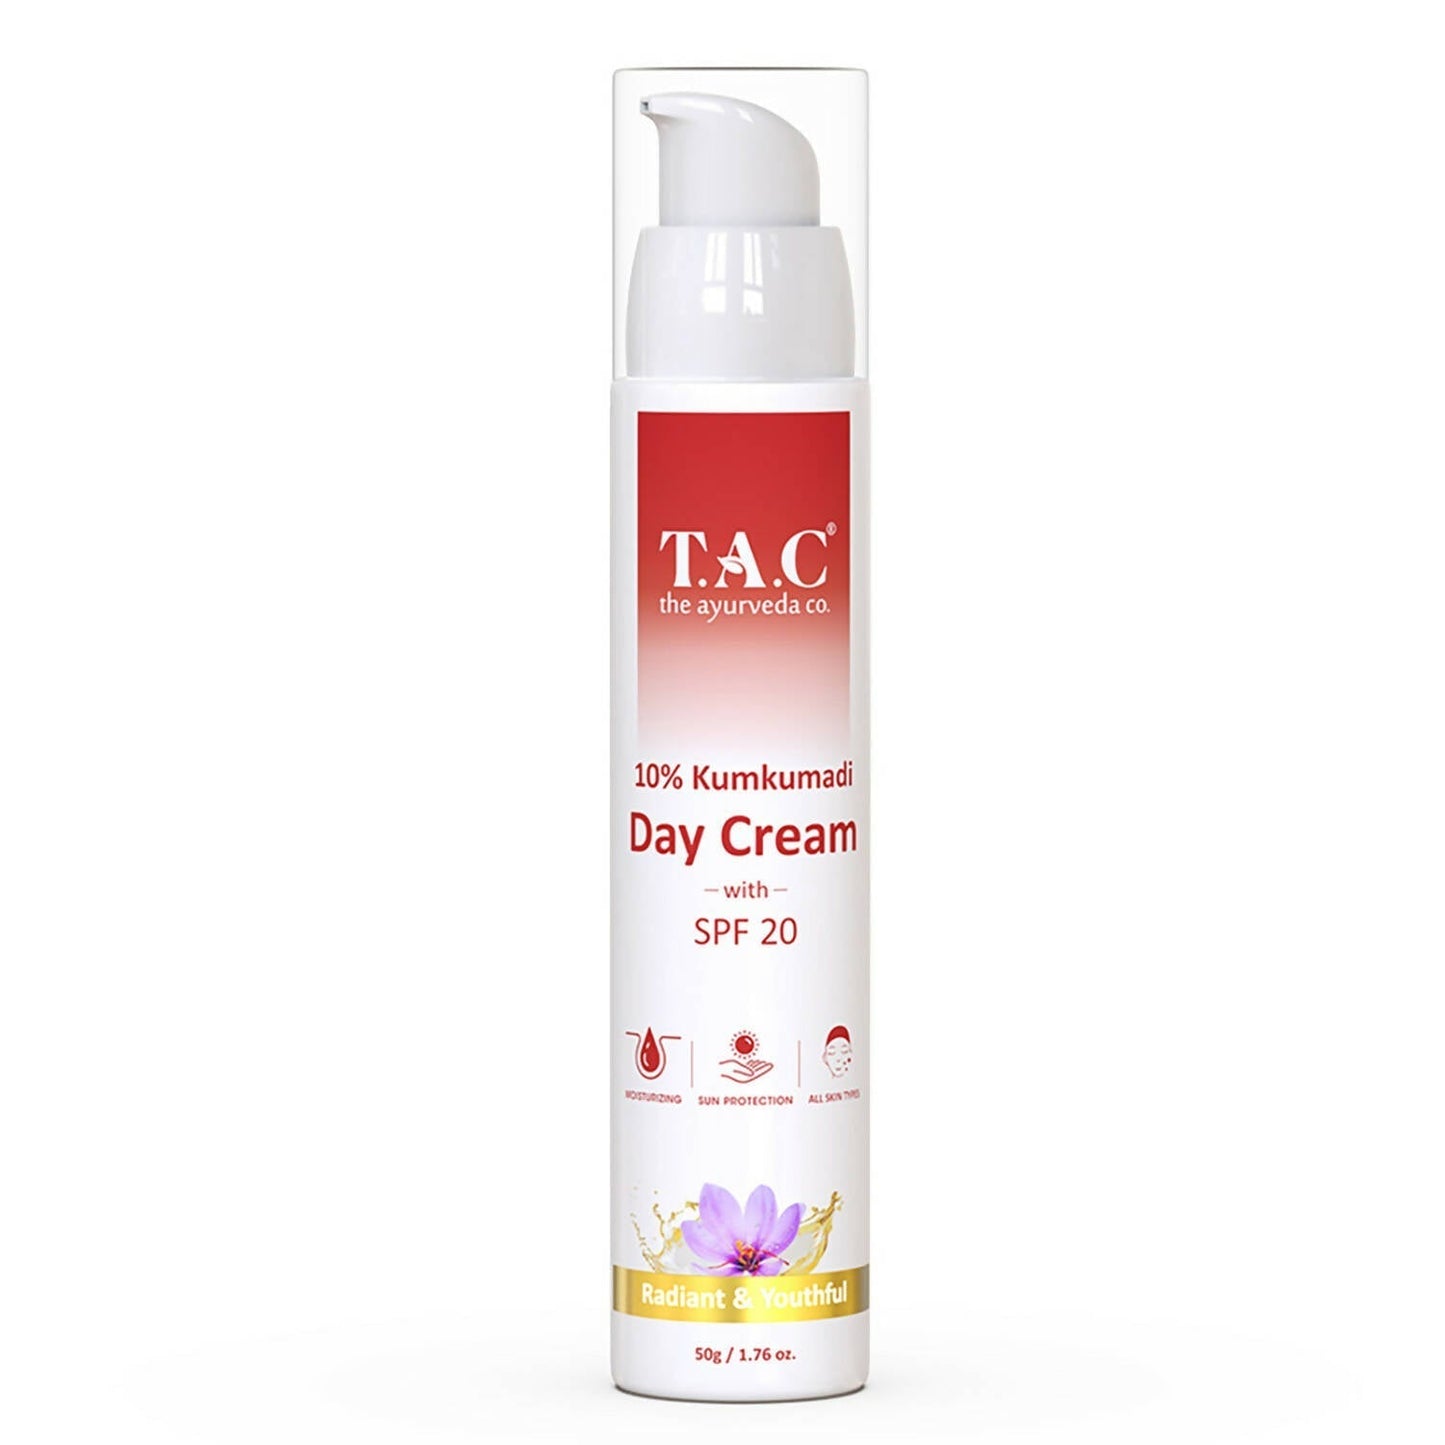 TAC - The Ayurveda Co. Kumkumadi Day Cream for Glowing Skin with SPF 20 - BUDNE